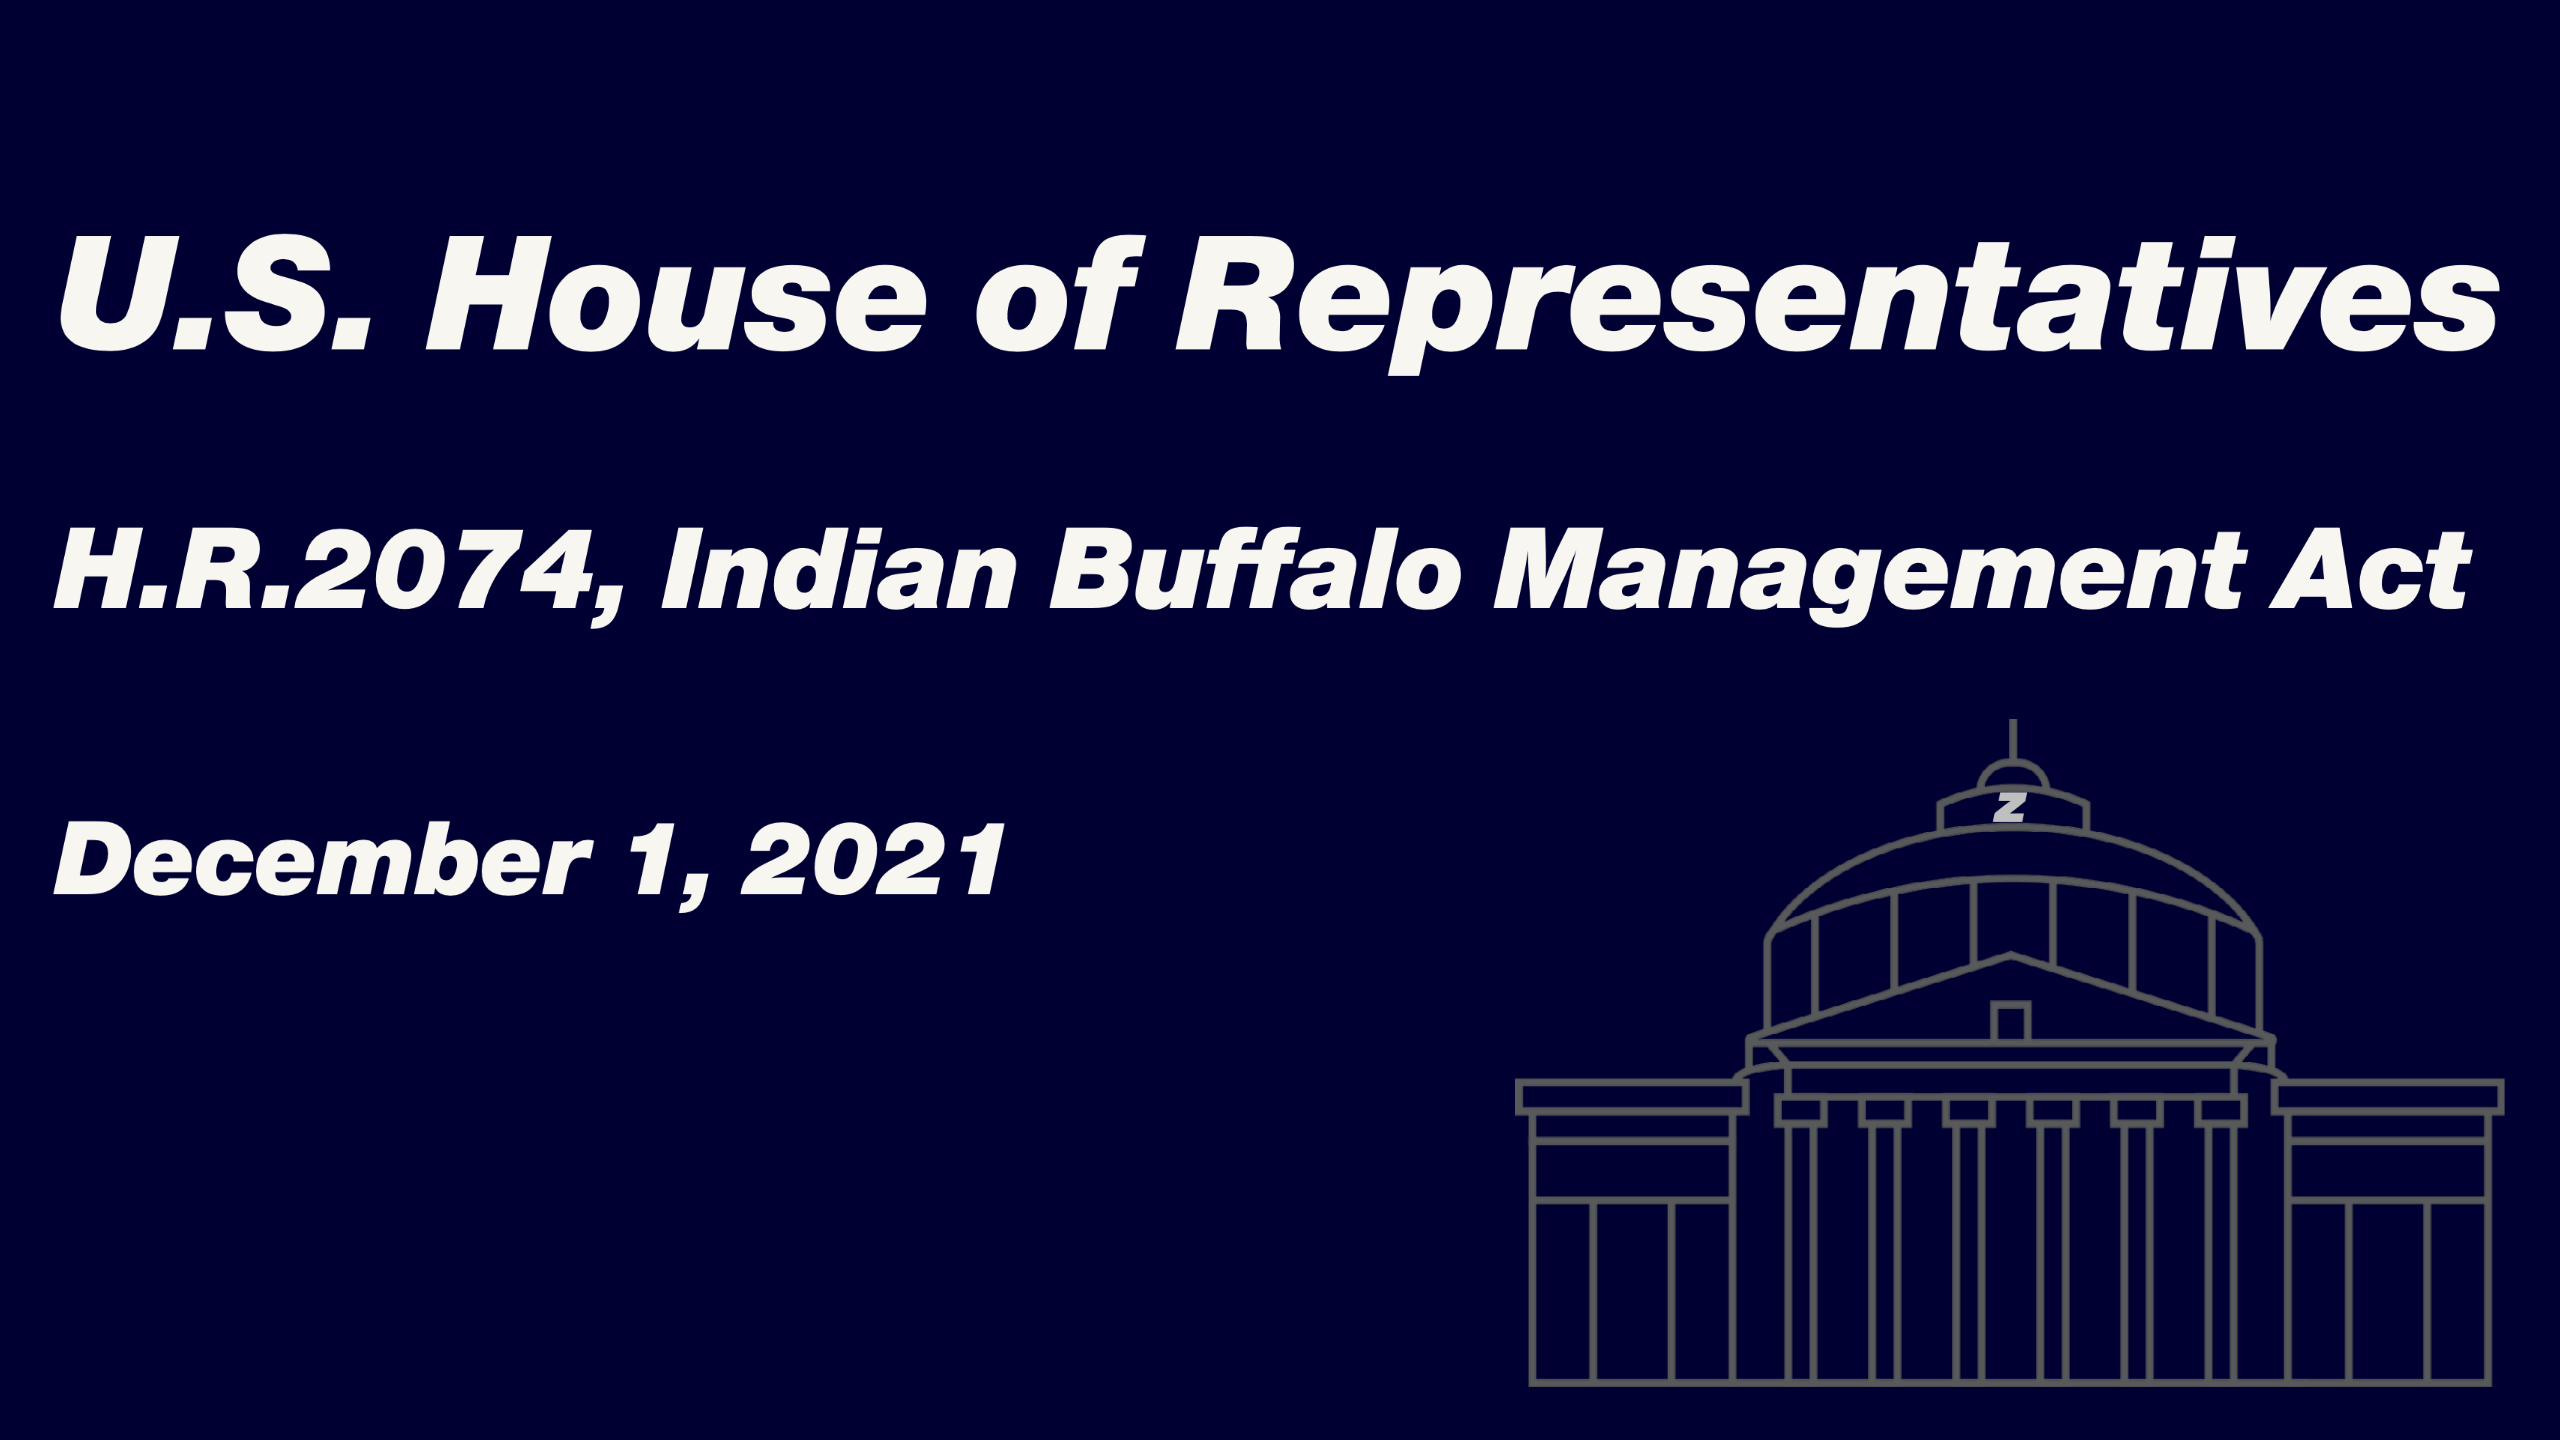 Indian Buffalo Management Act